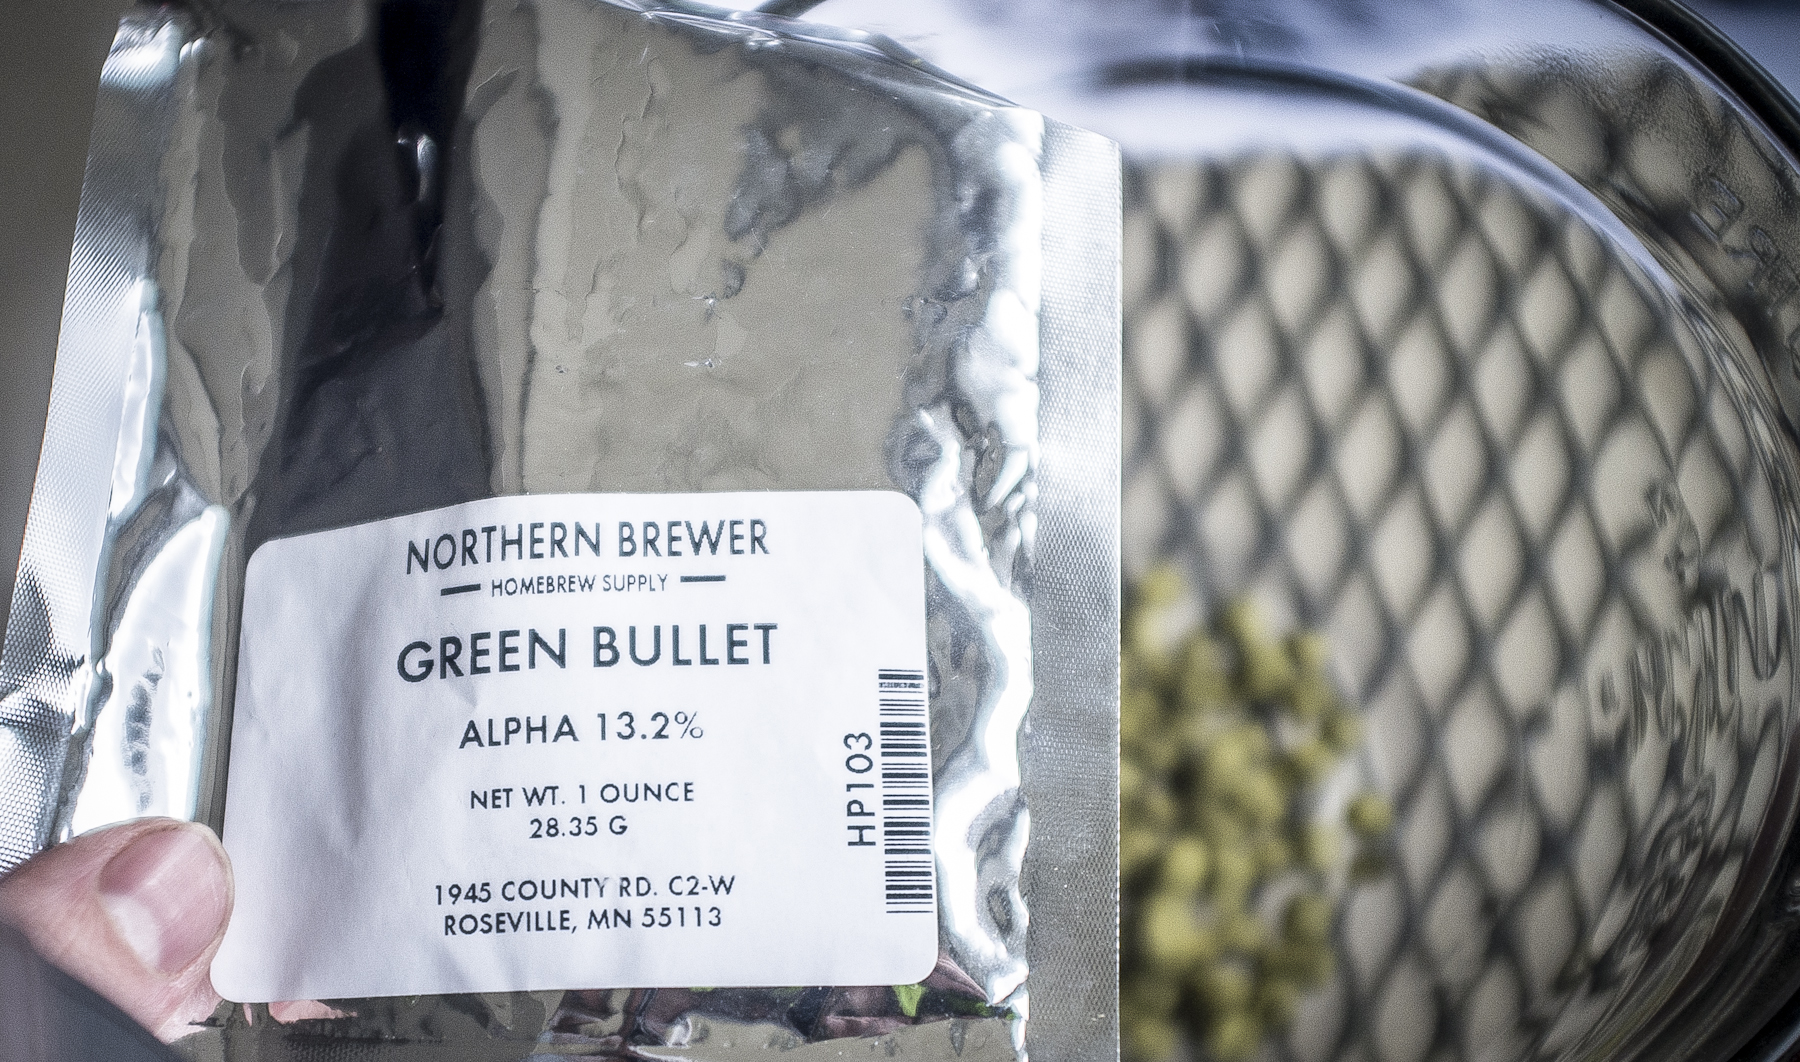 The Green Bullet Saison